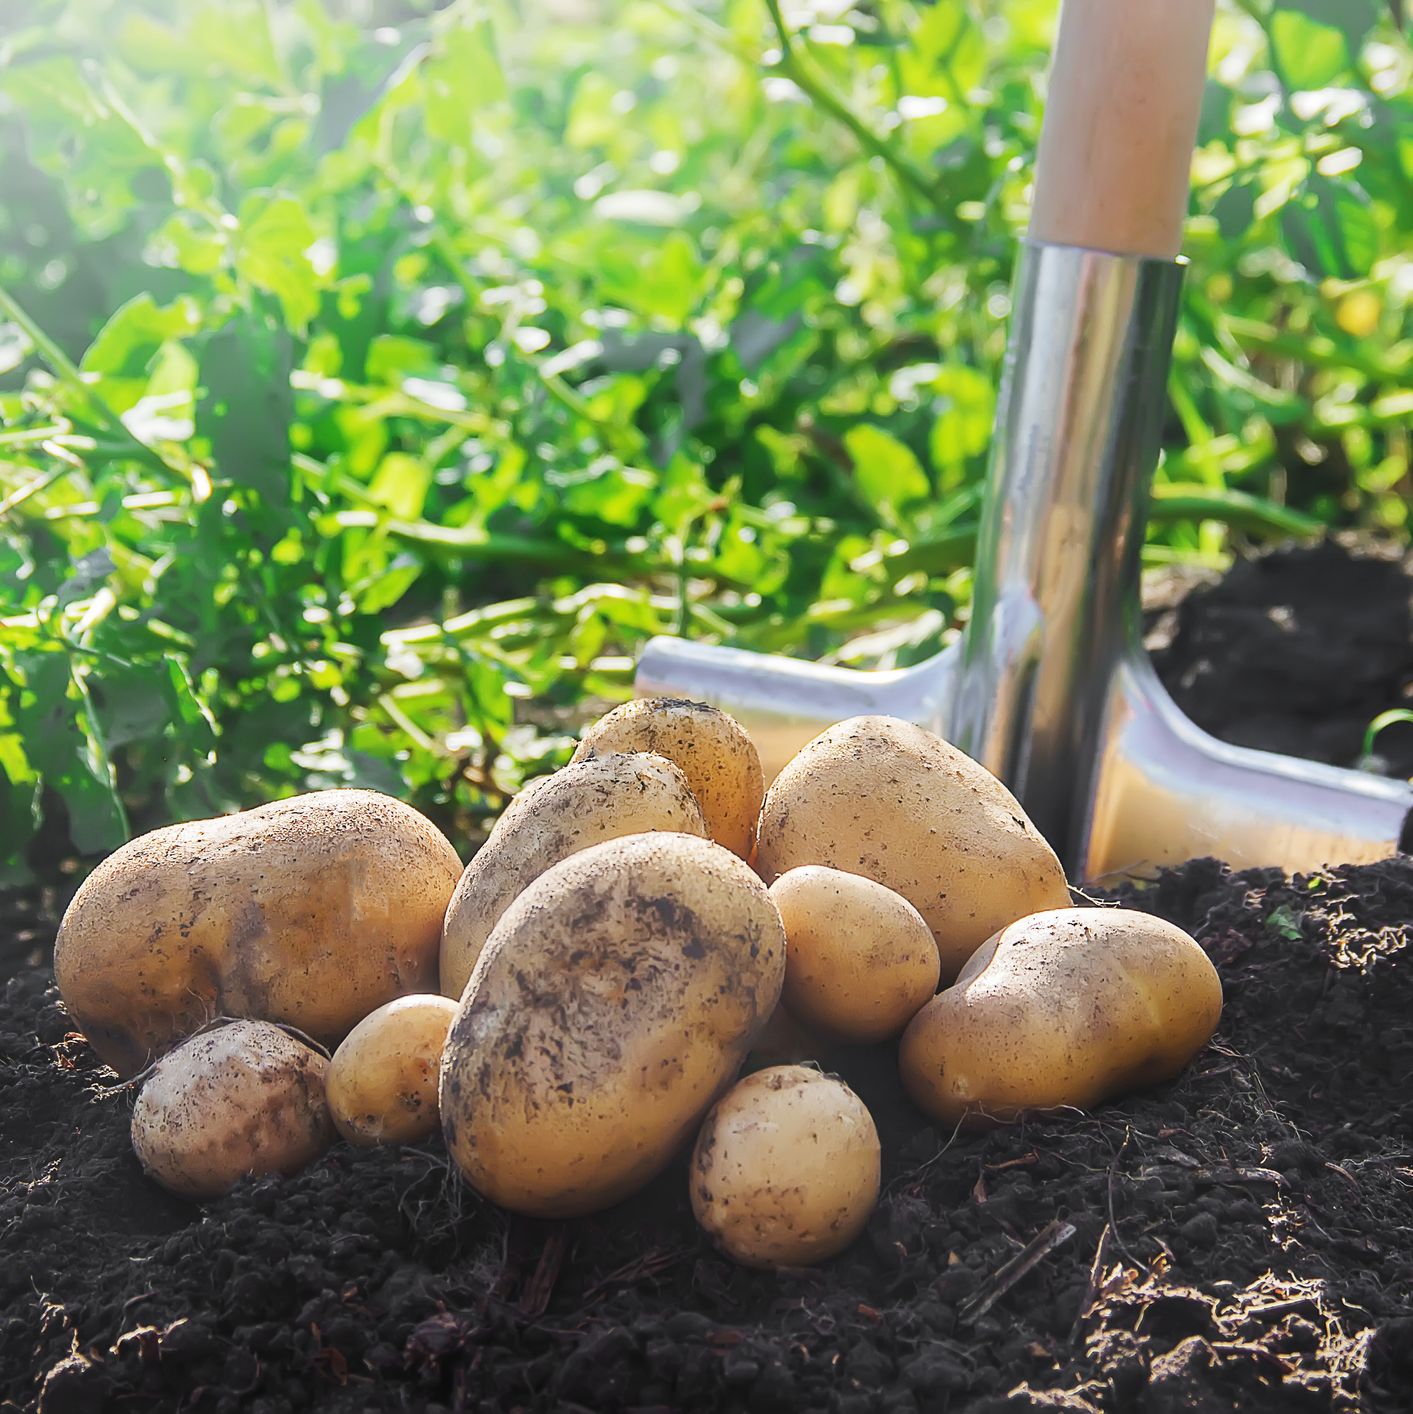 https://hips.hearstapps.com/hmg-prod/images/organic-homemade-vegetables-harvest-potatoes-royalty-free-image-1573562767.jpg?crop=0.66635xw:1xh;center,top&resize=2048:*